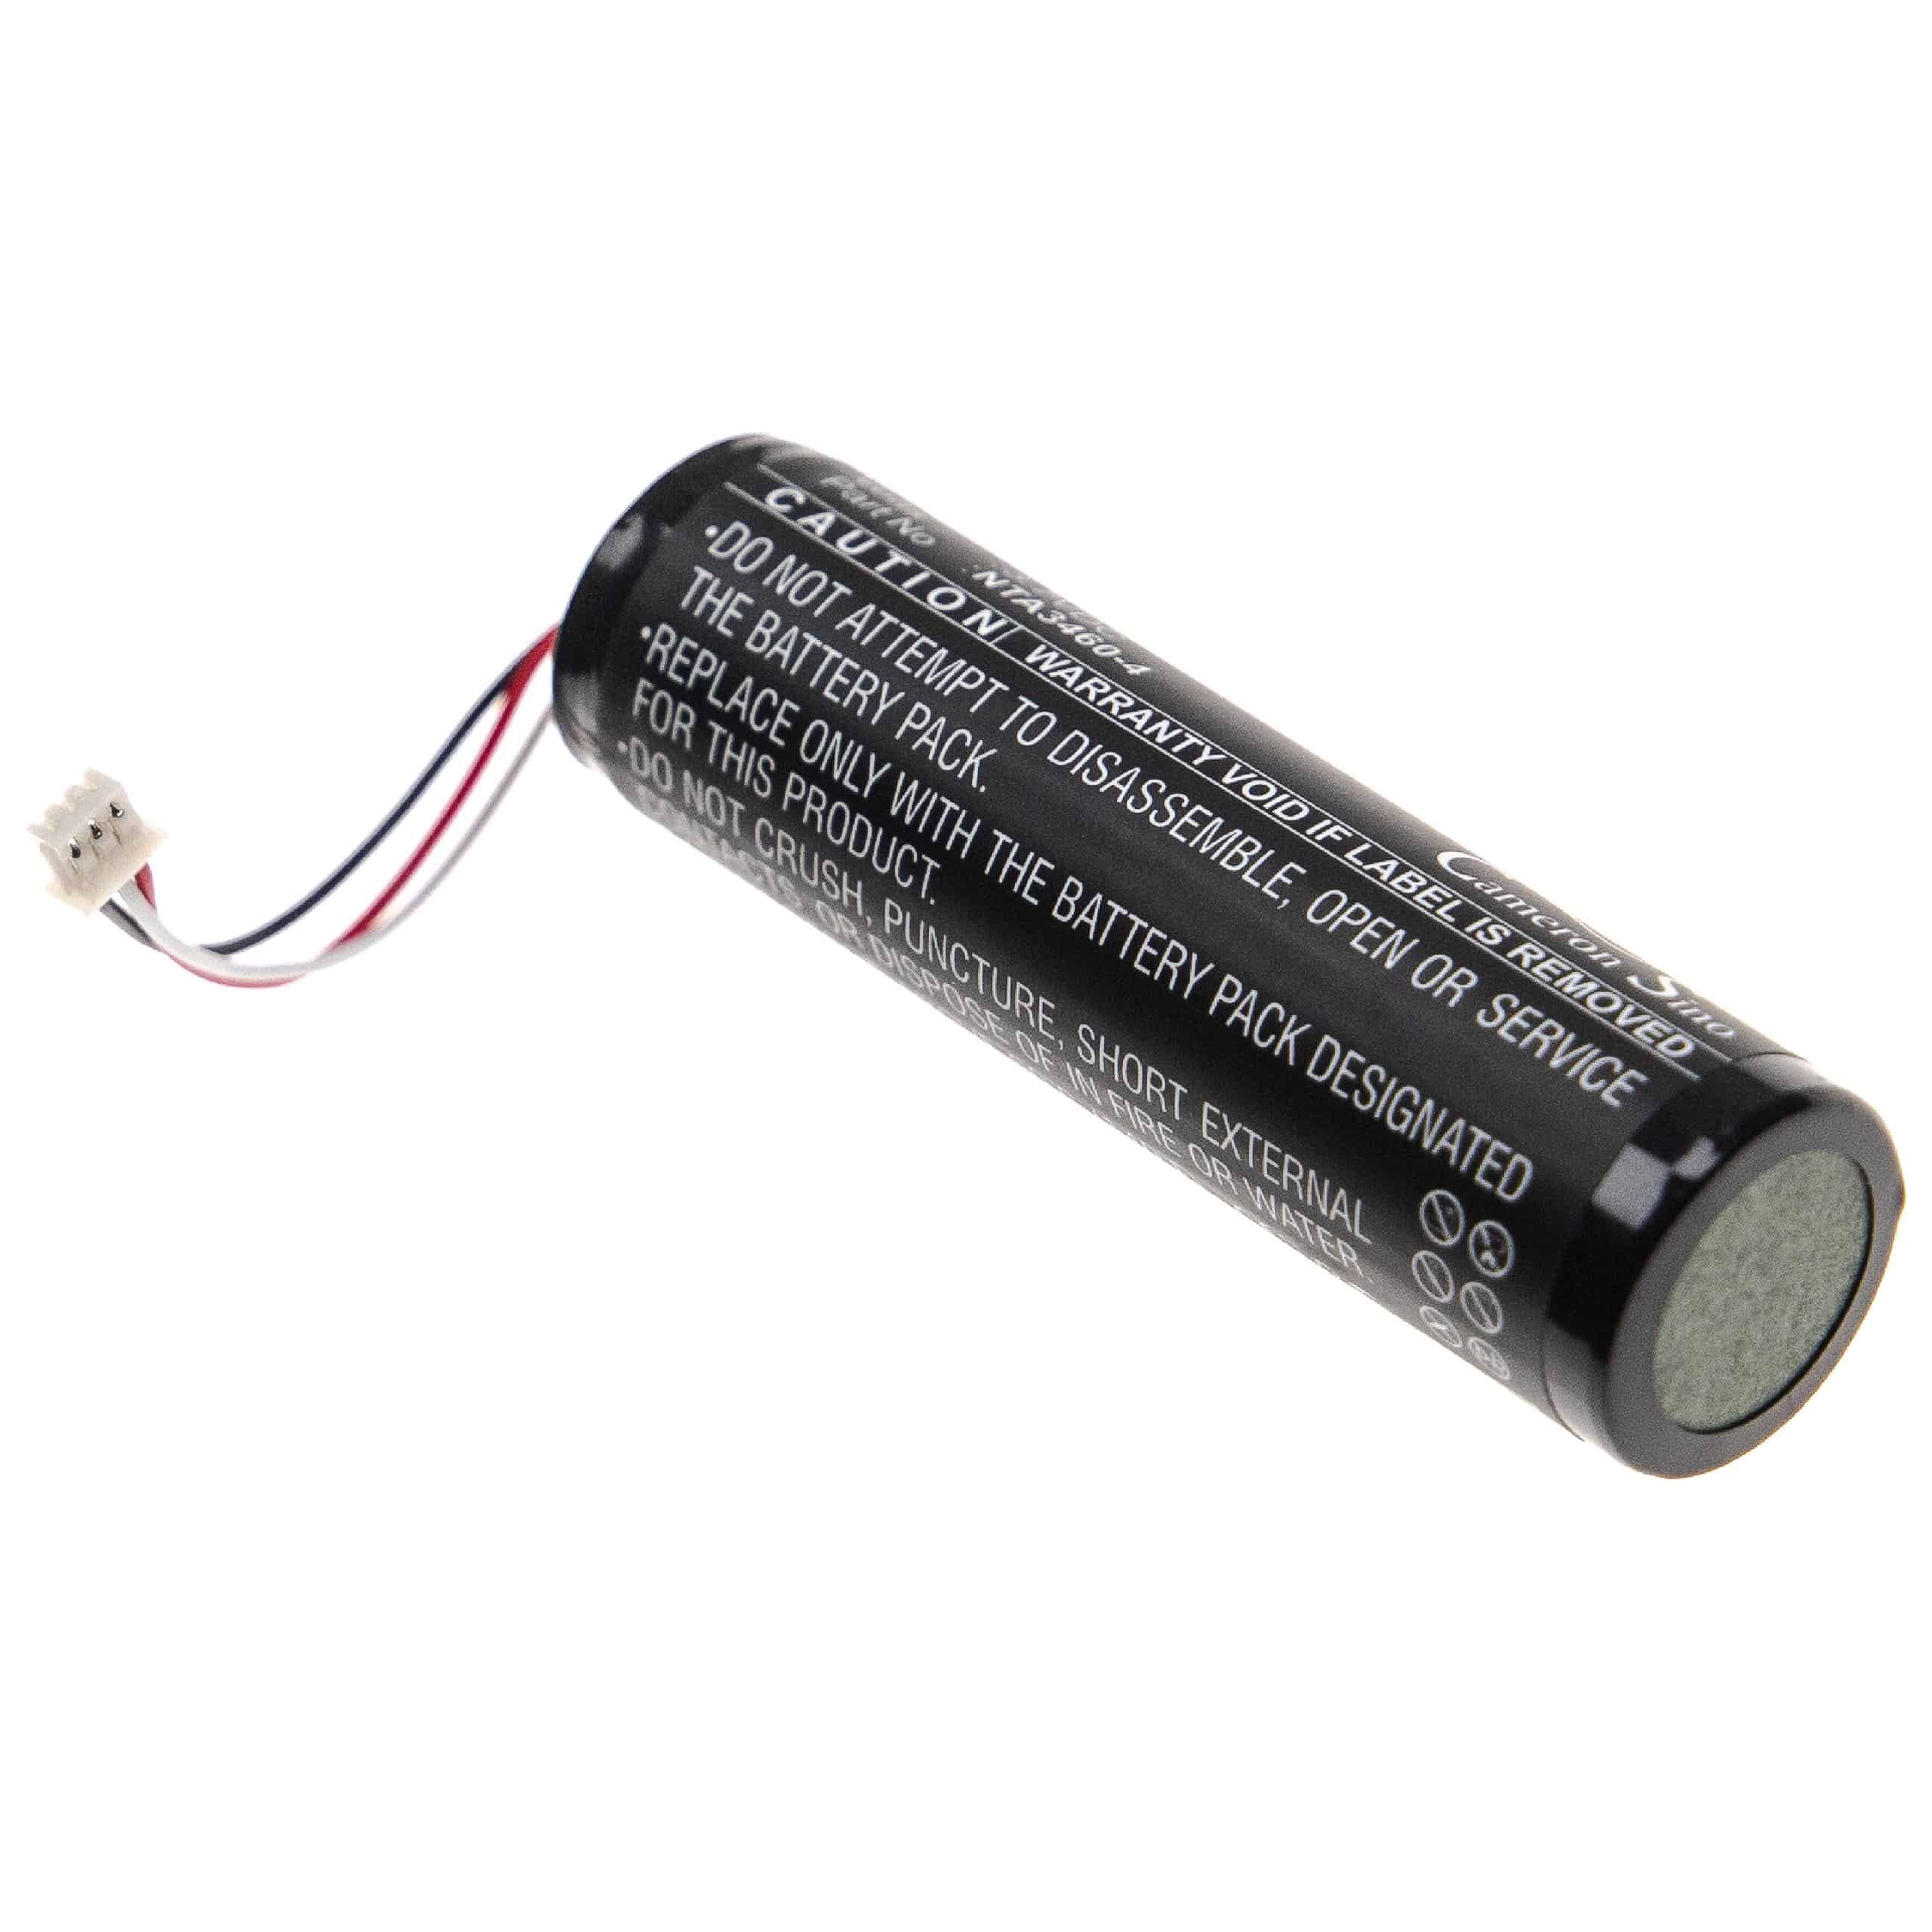 Akumulator do niani elektronicznej zamiennik Philips NTA3459-4, NTA3460-4 - 2600 mAh 3,7 V LiPo